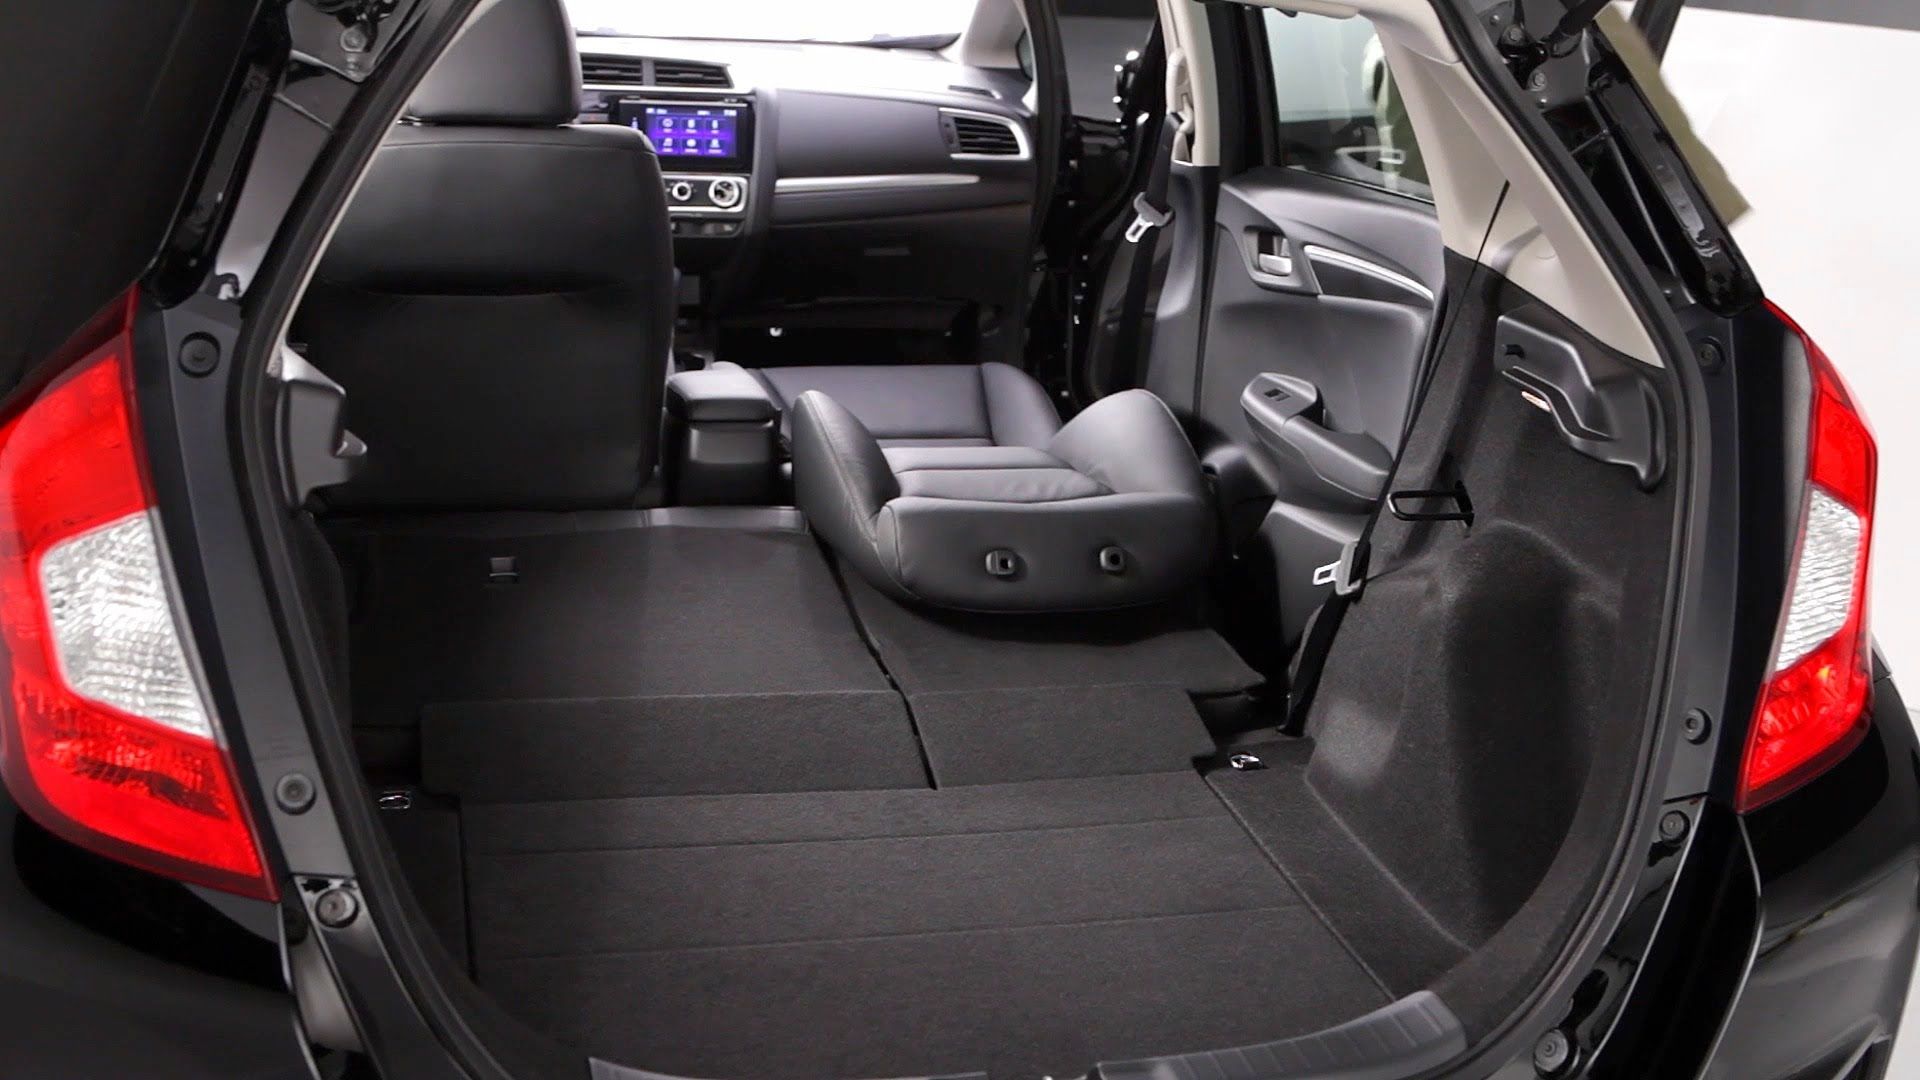 2015 Honda Fit Interior View (View 7 of 16)